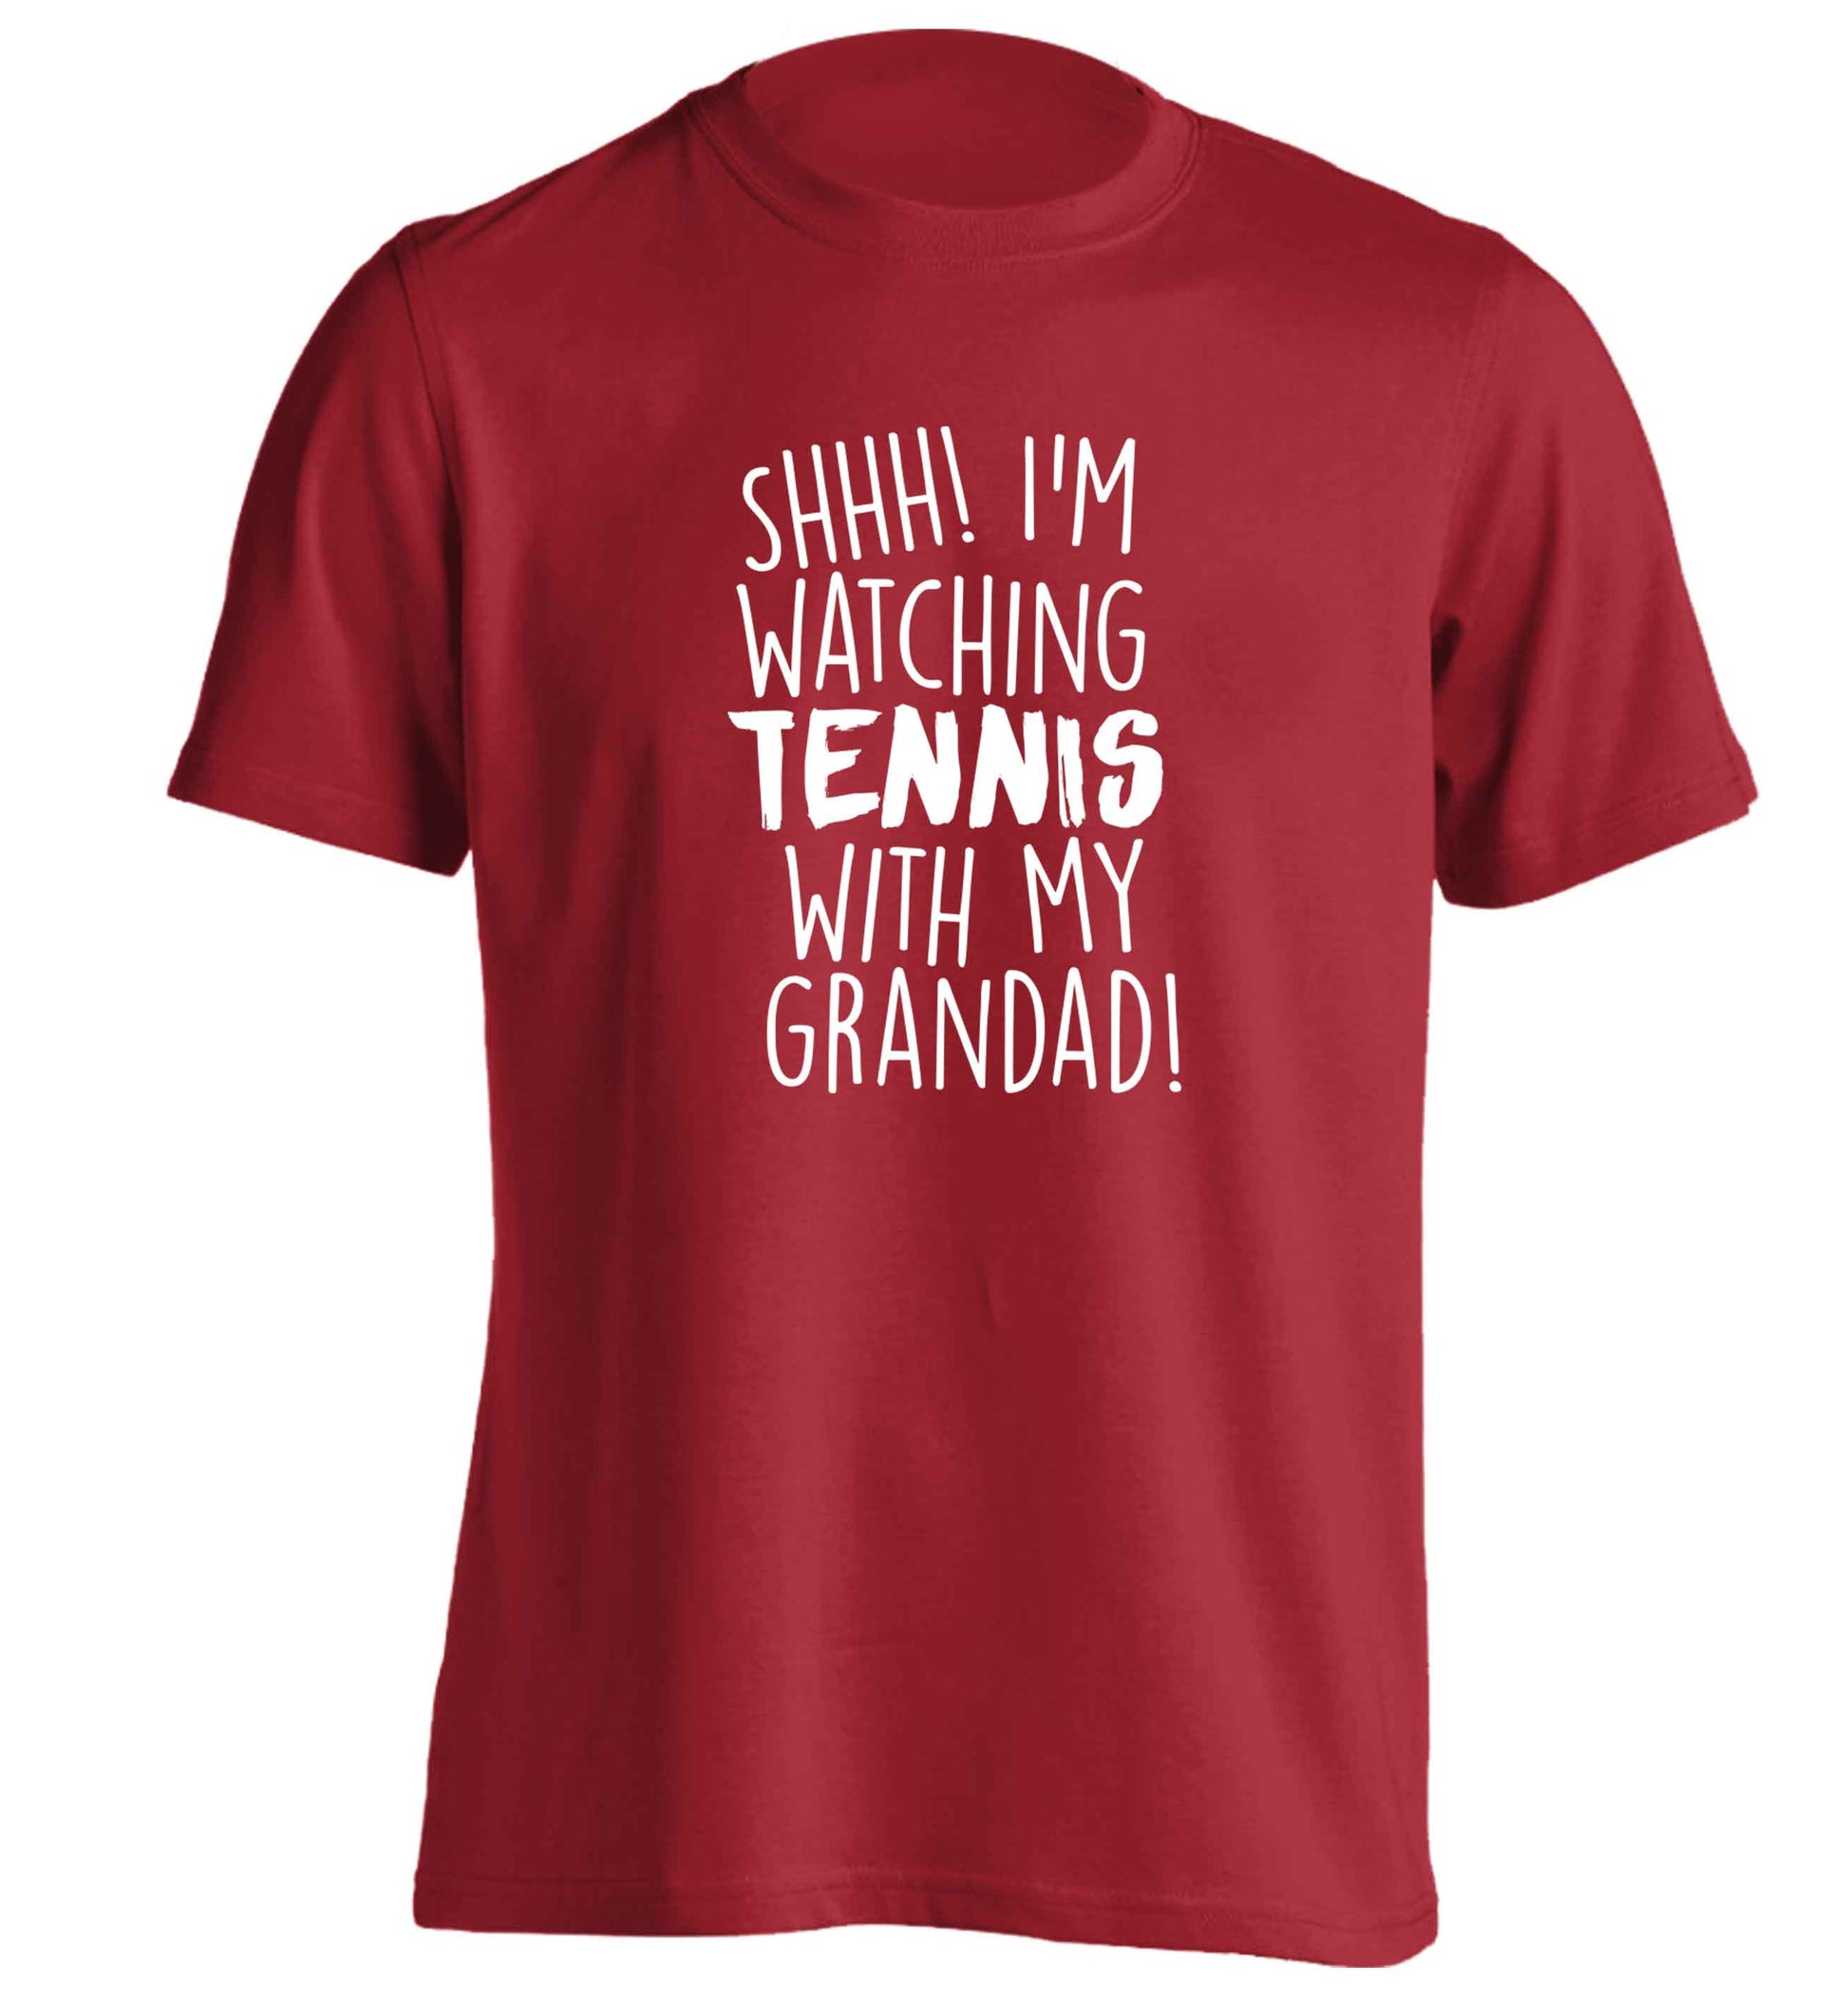 Shh! I'm watching tennis with my grandad! adults unisex red Tshirt 2XL